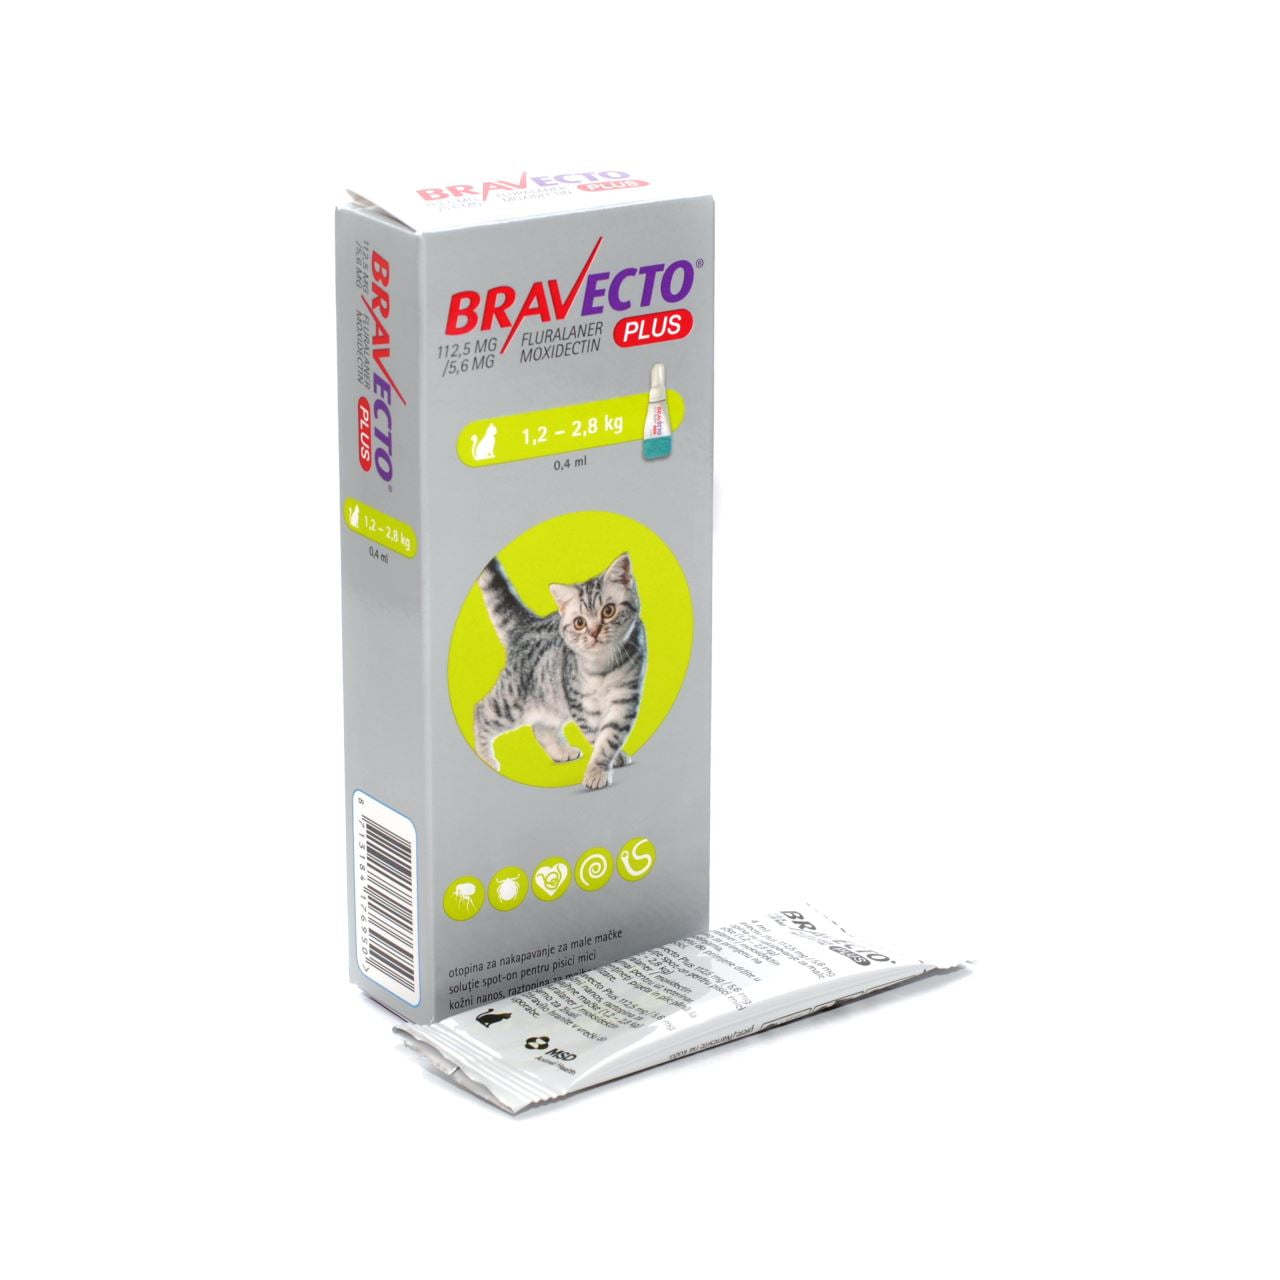 Bravecto plus spot on cat 112,5 mg*1 dz